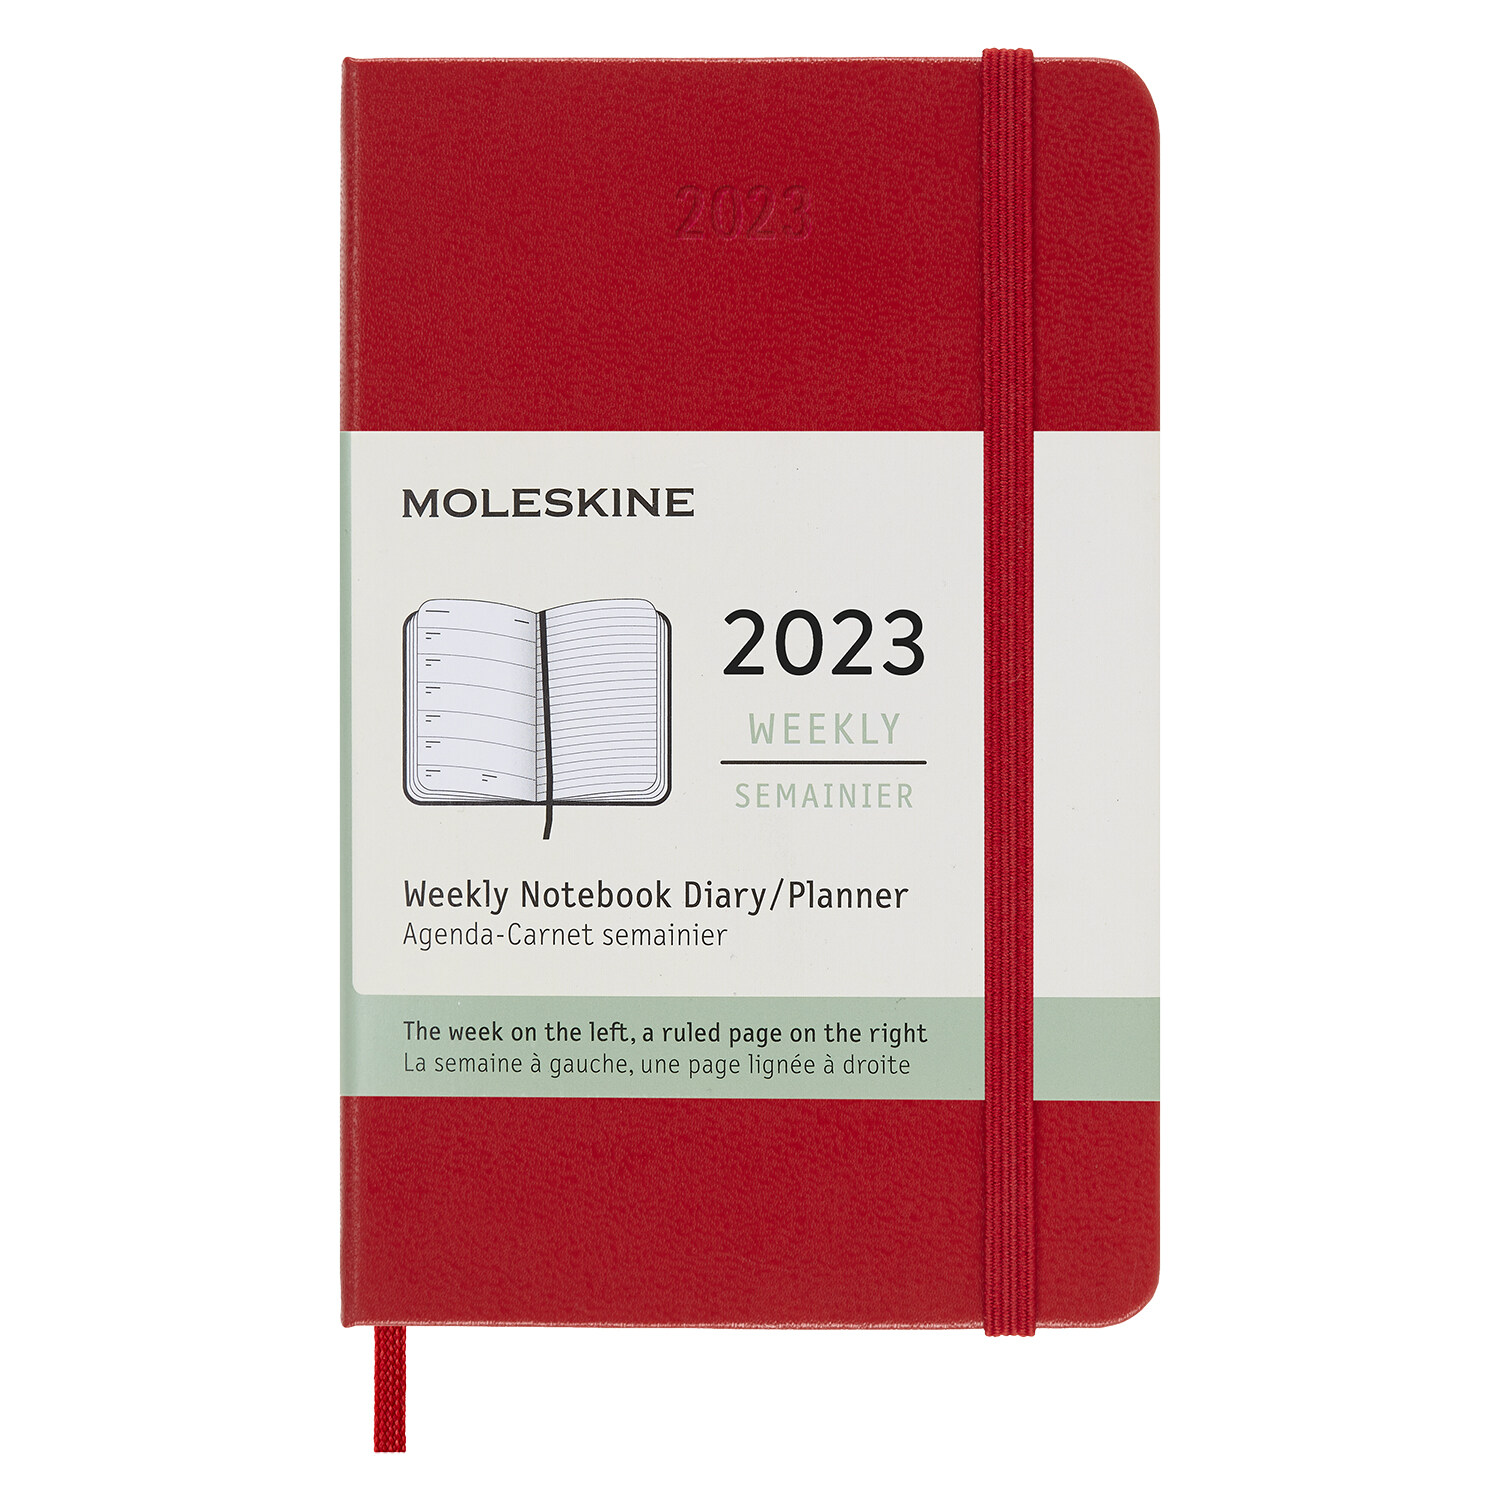 Moleskine 2023 Weekly Notebook Planner, 12m, Pocket, Scarlet Red, Hard Cover (3.5 X 5.5) (Other)